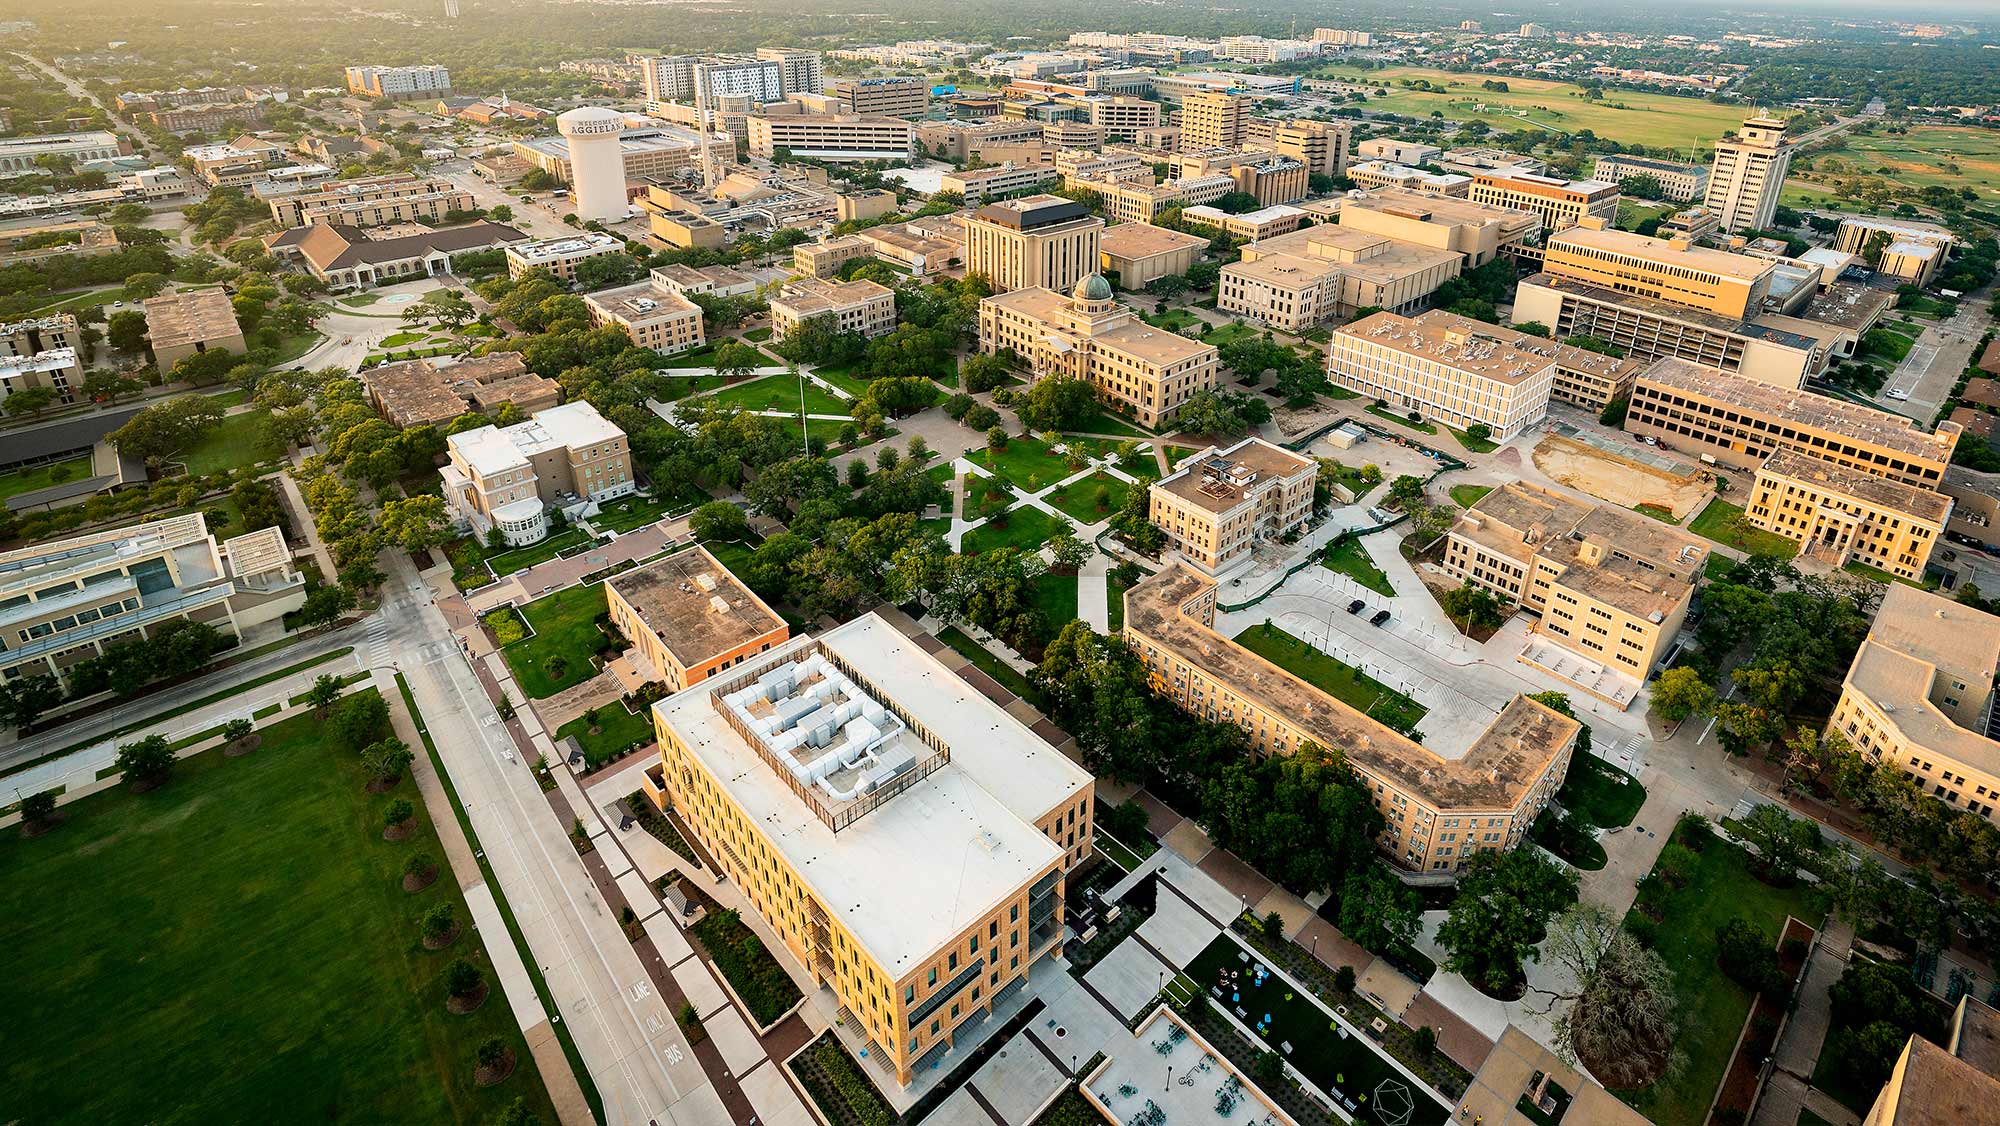 aerial view of campus buildings